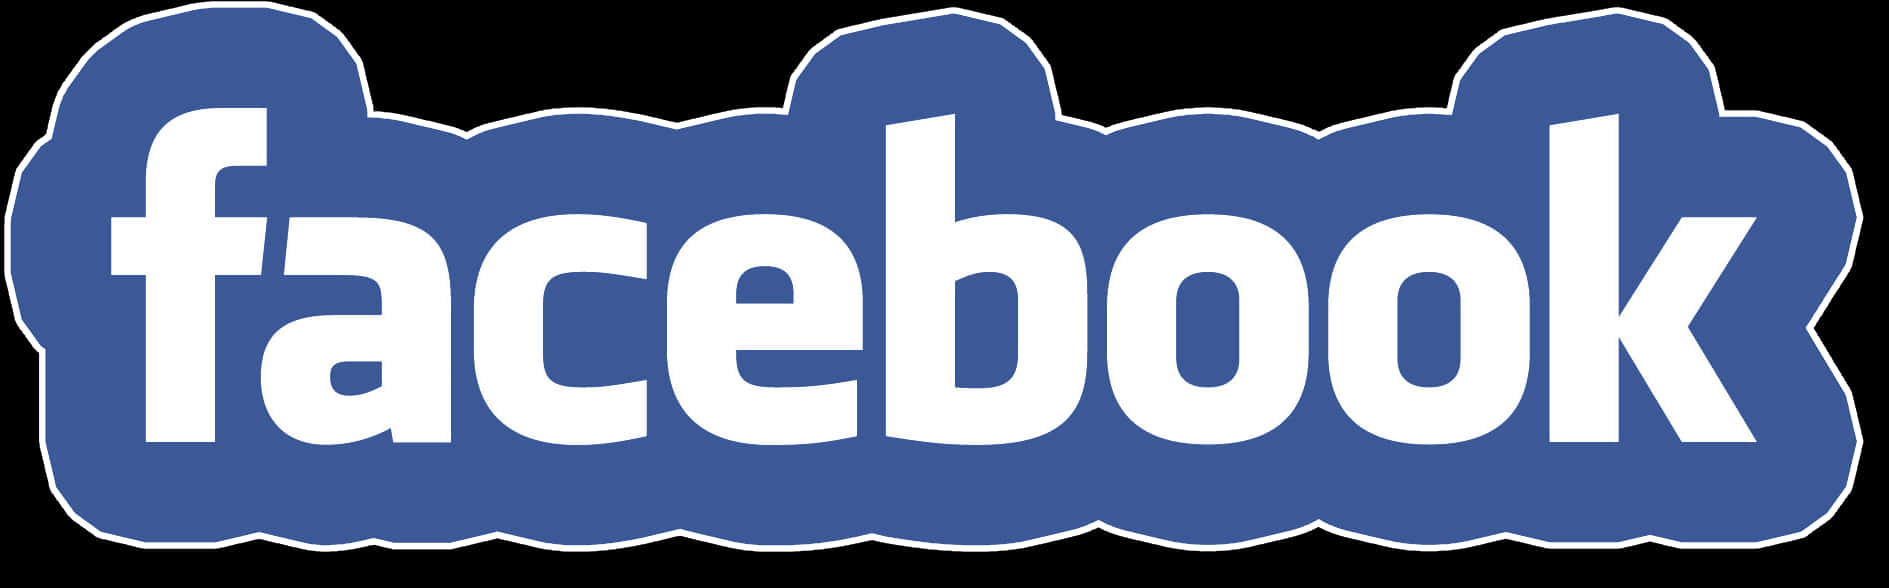 Facebook Logo Blueon Transparent PNG image